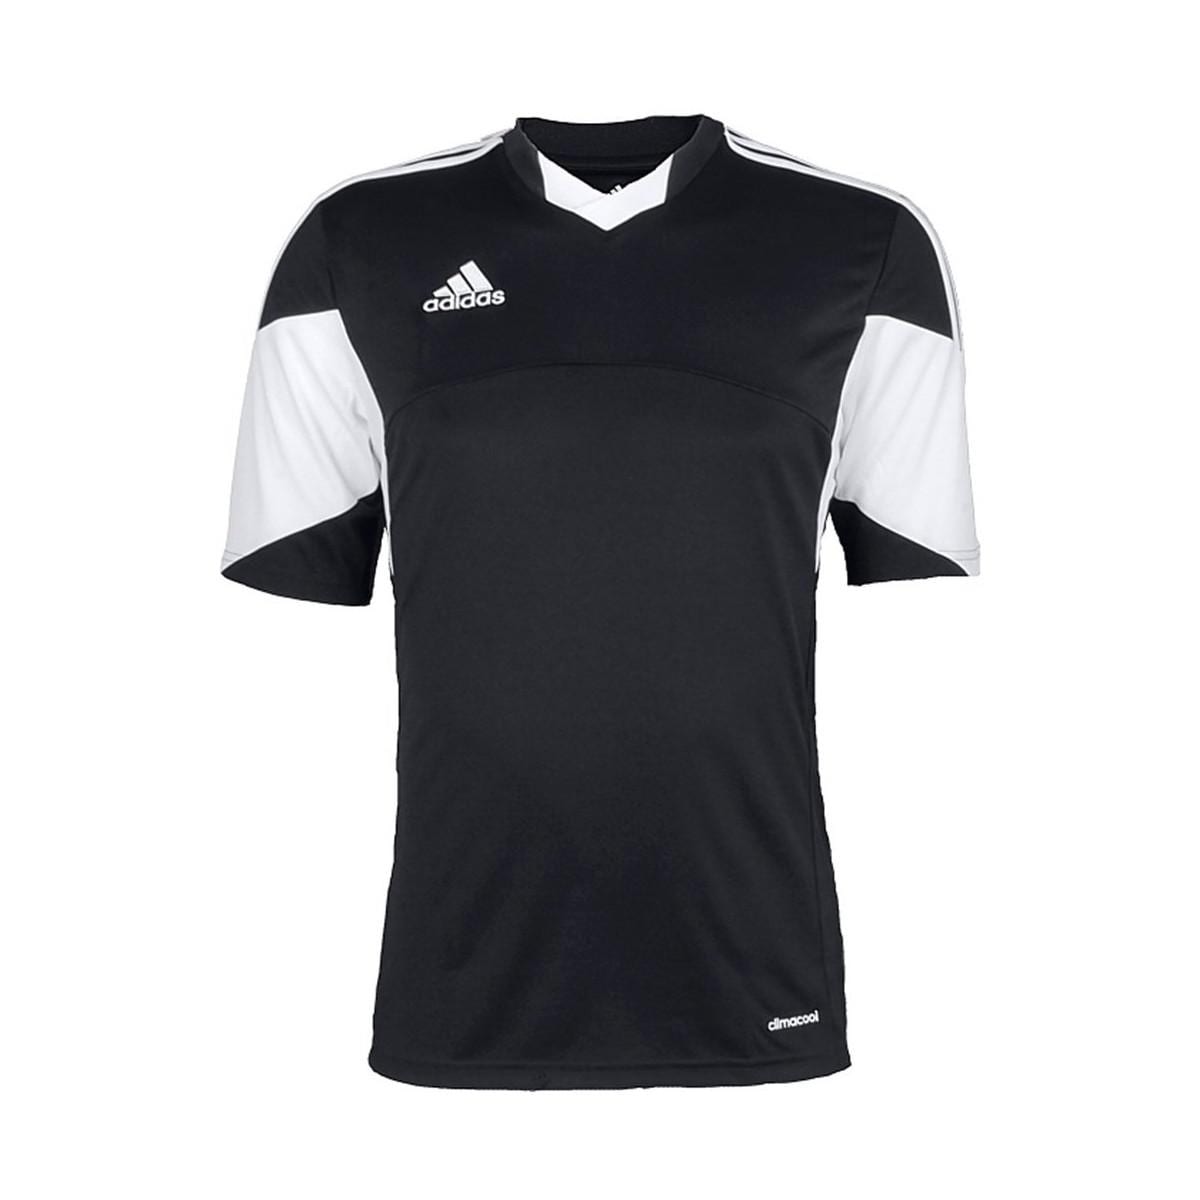 Adidas Boys Tiro 13 Jersey T-Shirt Black/White Size Youth Small - Black